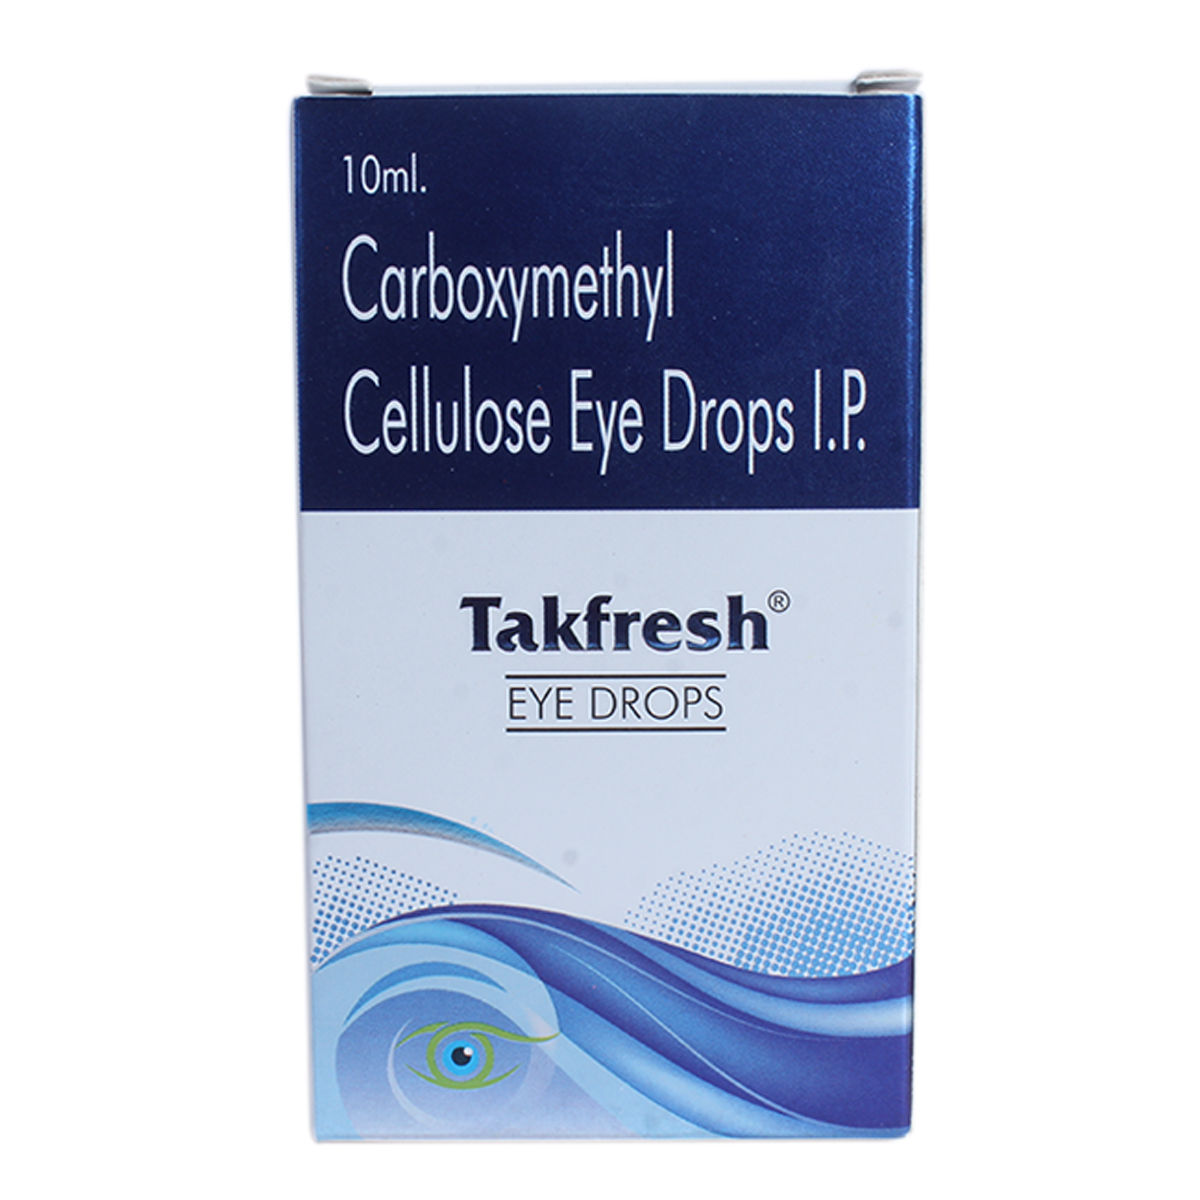 Buy Takfresh Eye Drops 10 ml Online